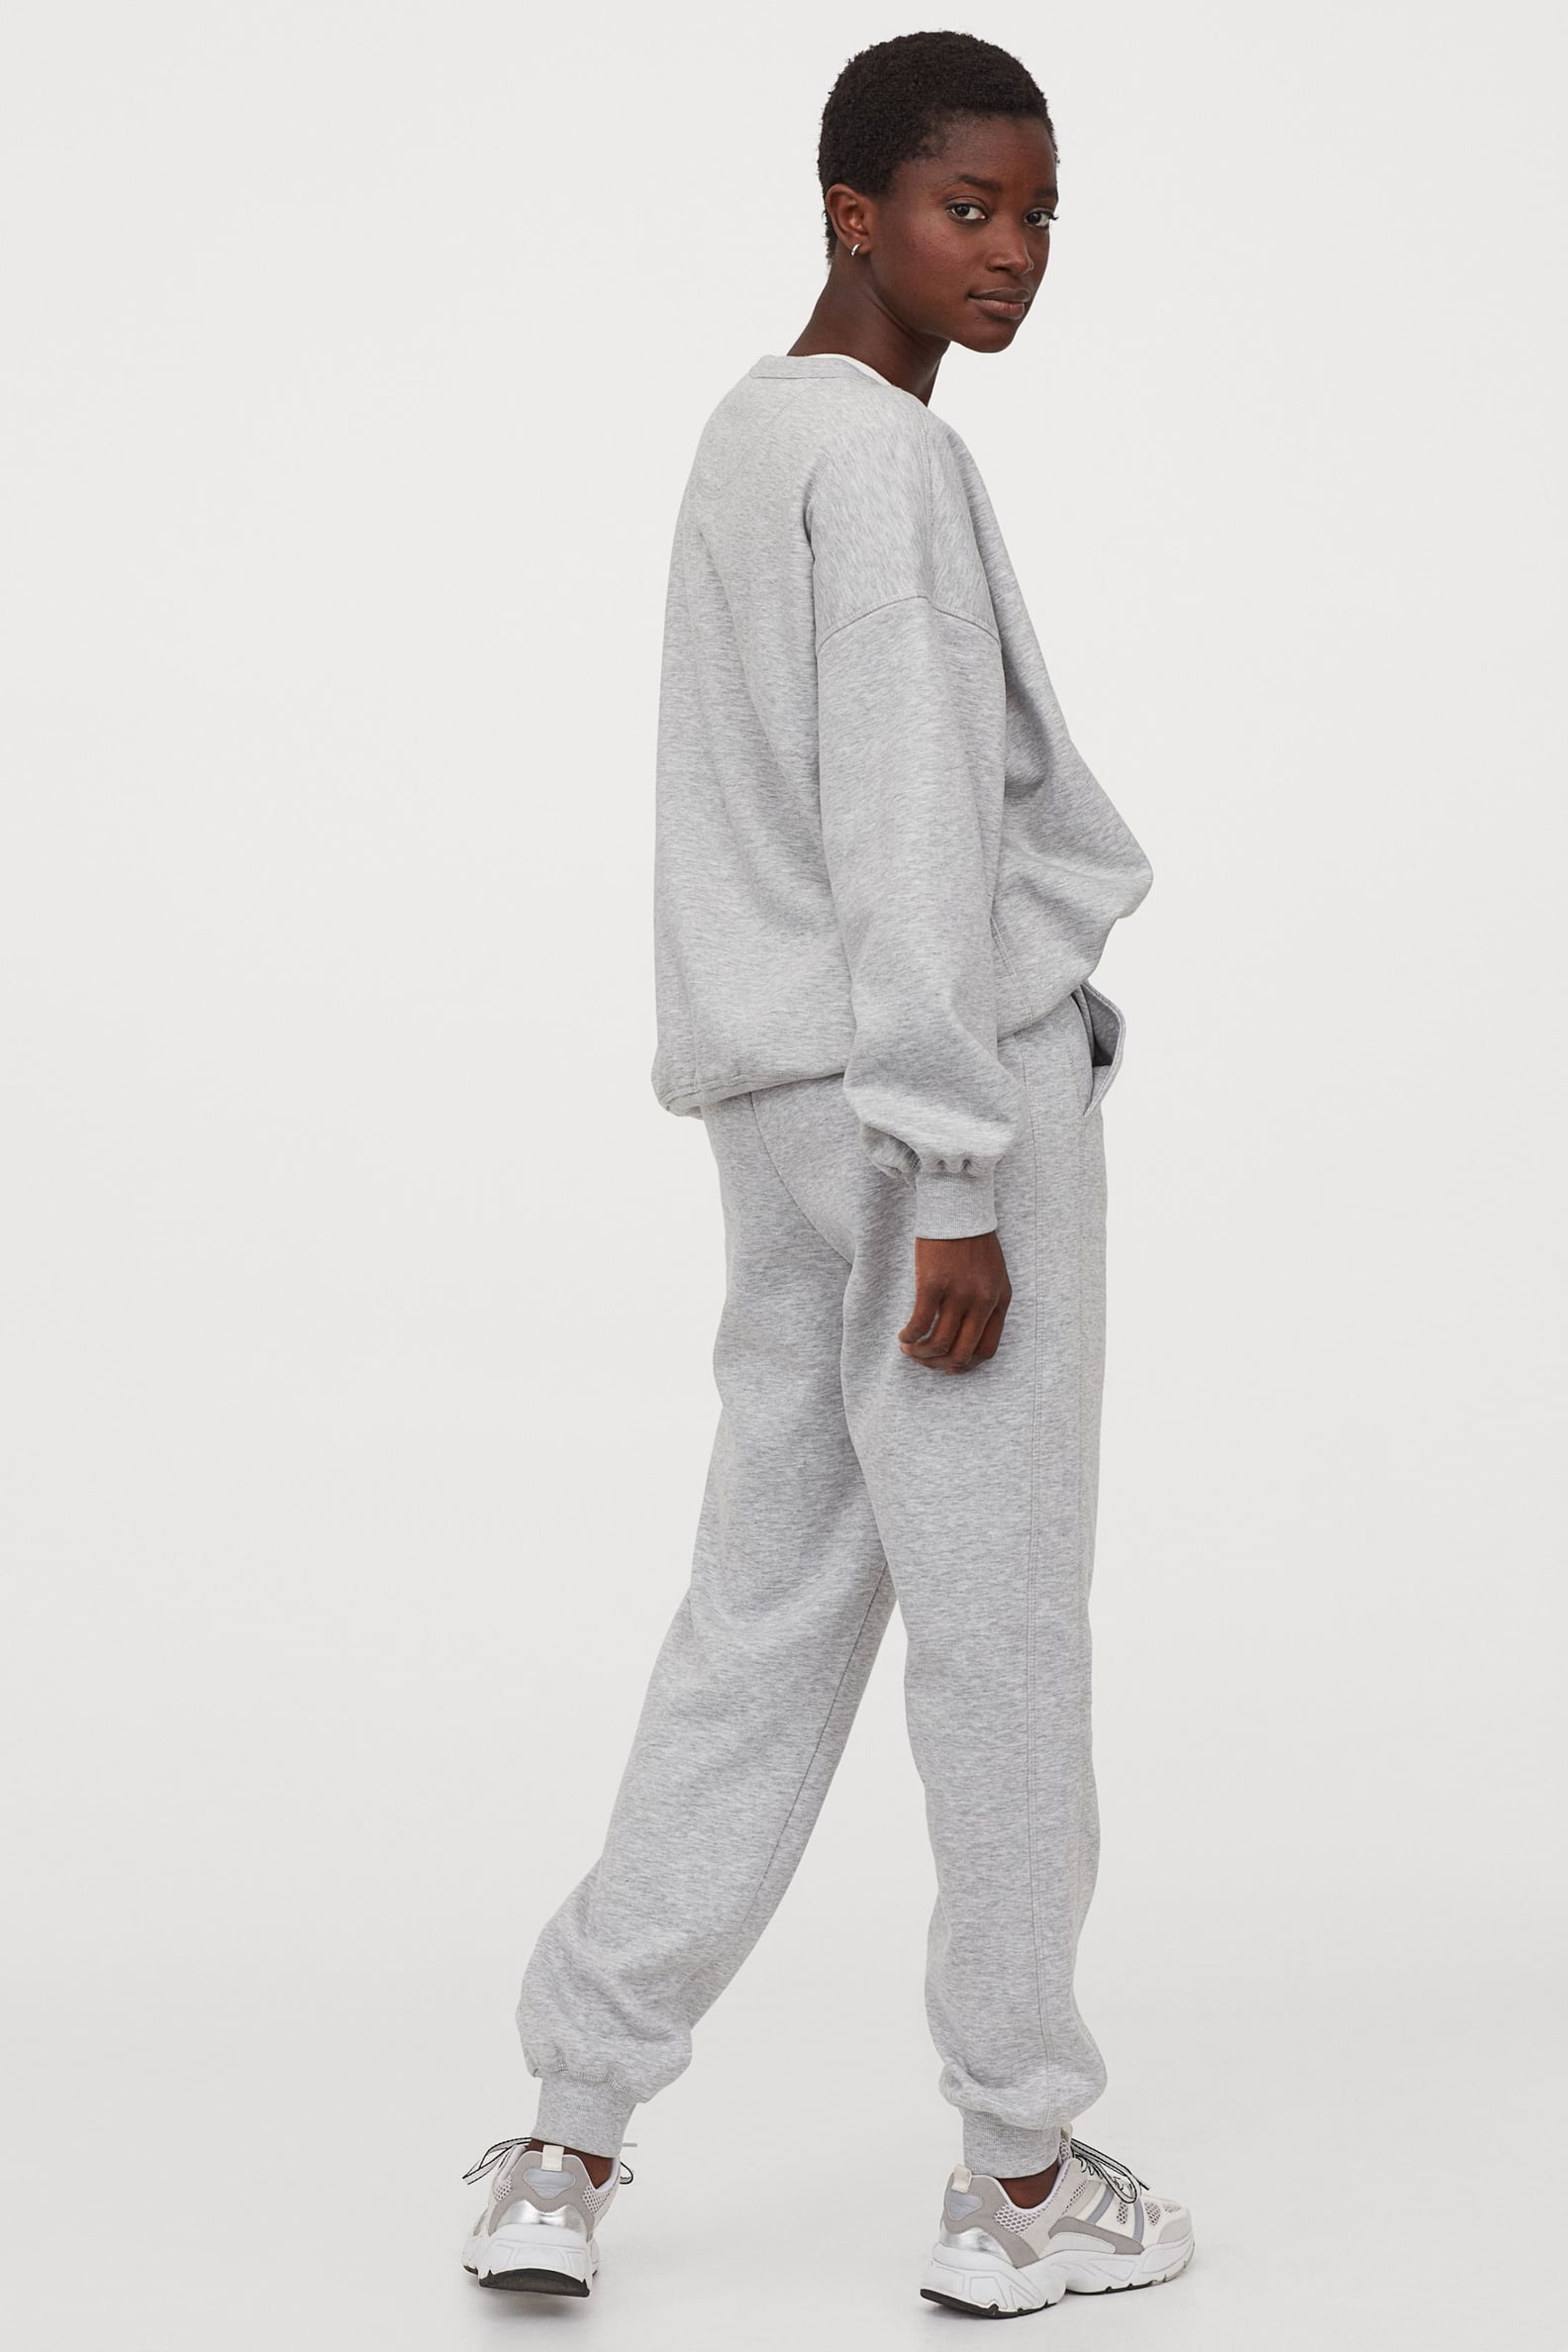 How to Style Gray Sweatpants | POPSUGAR Fashion